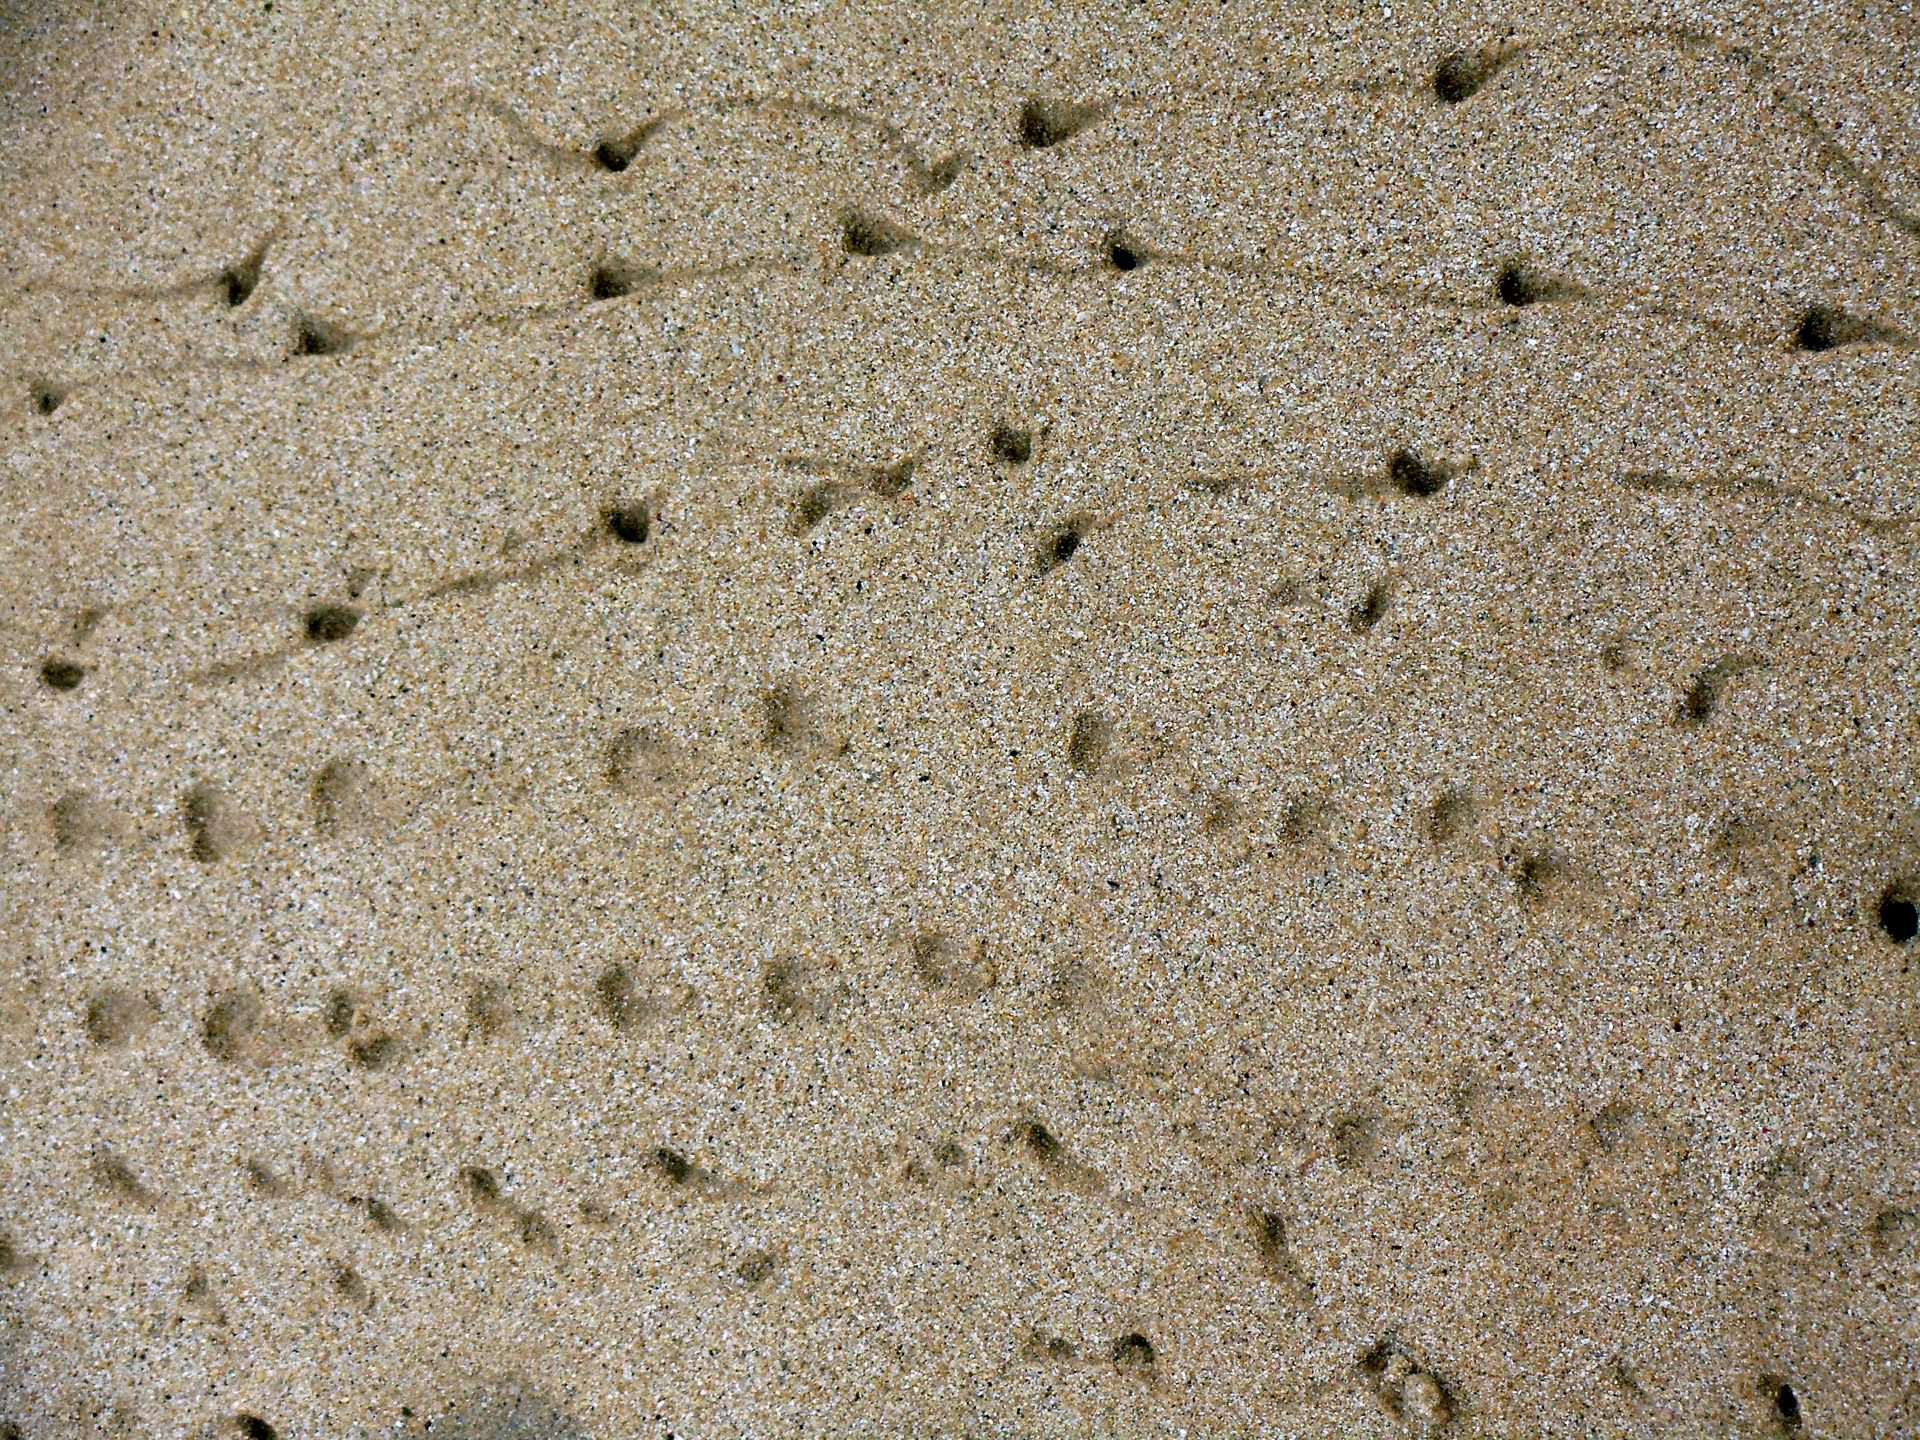 crab-sand-footprints-texture